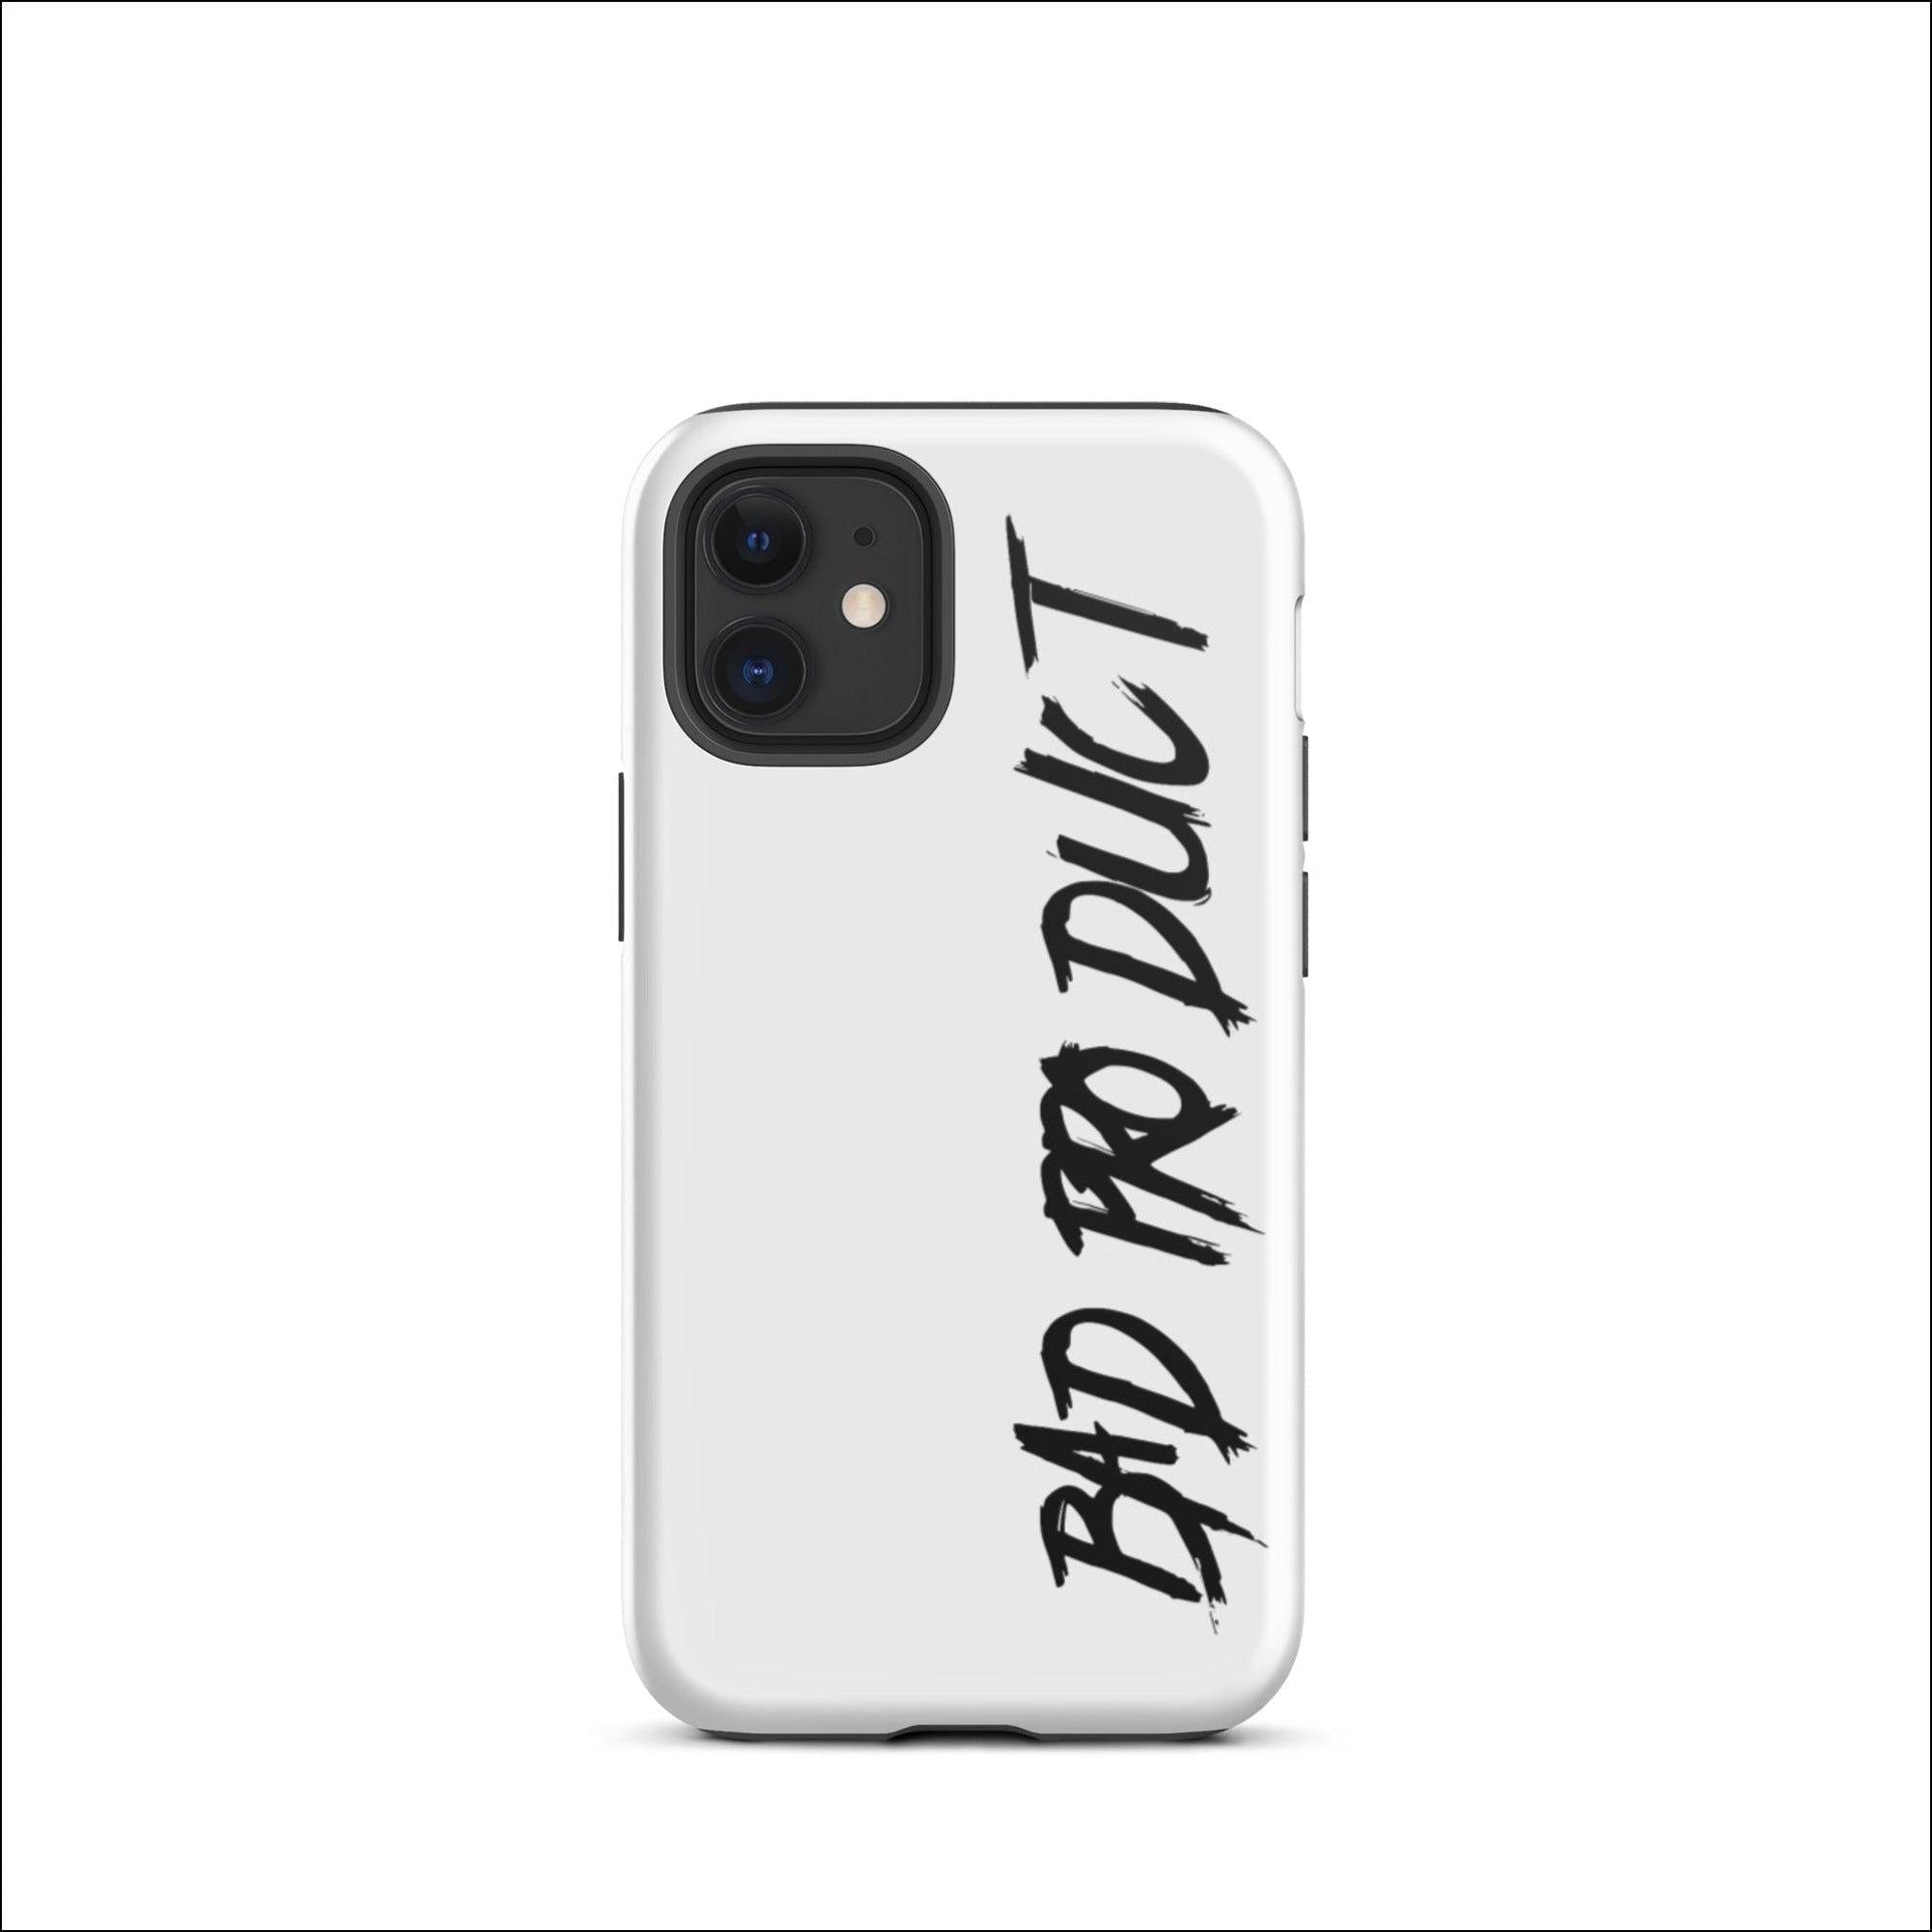 Bp Tough Iphone Case - Bad Product